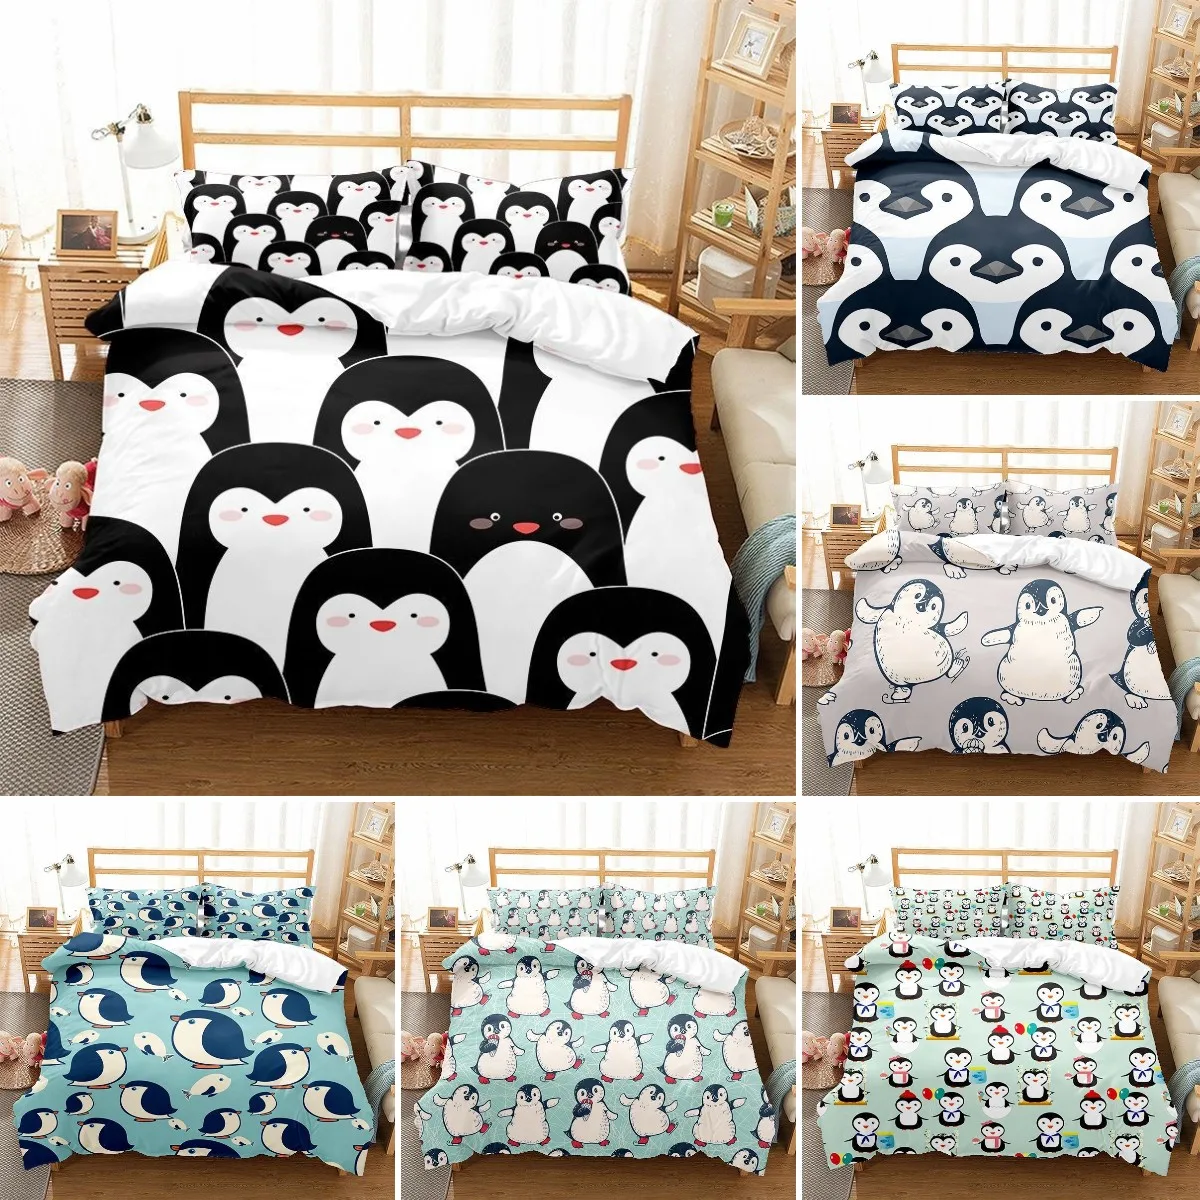 

Cartoon Penguin Bedding Set King/Queen Size For Kids Boys Girls,animated Antarctic Animal Illustration Quilt Cover,White Black